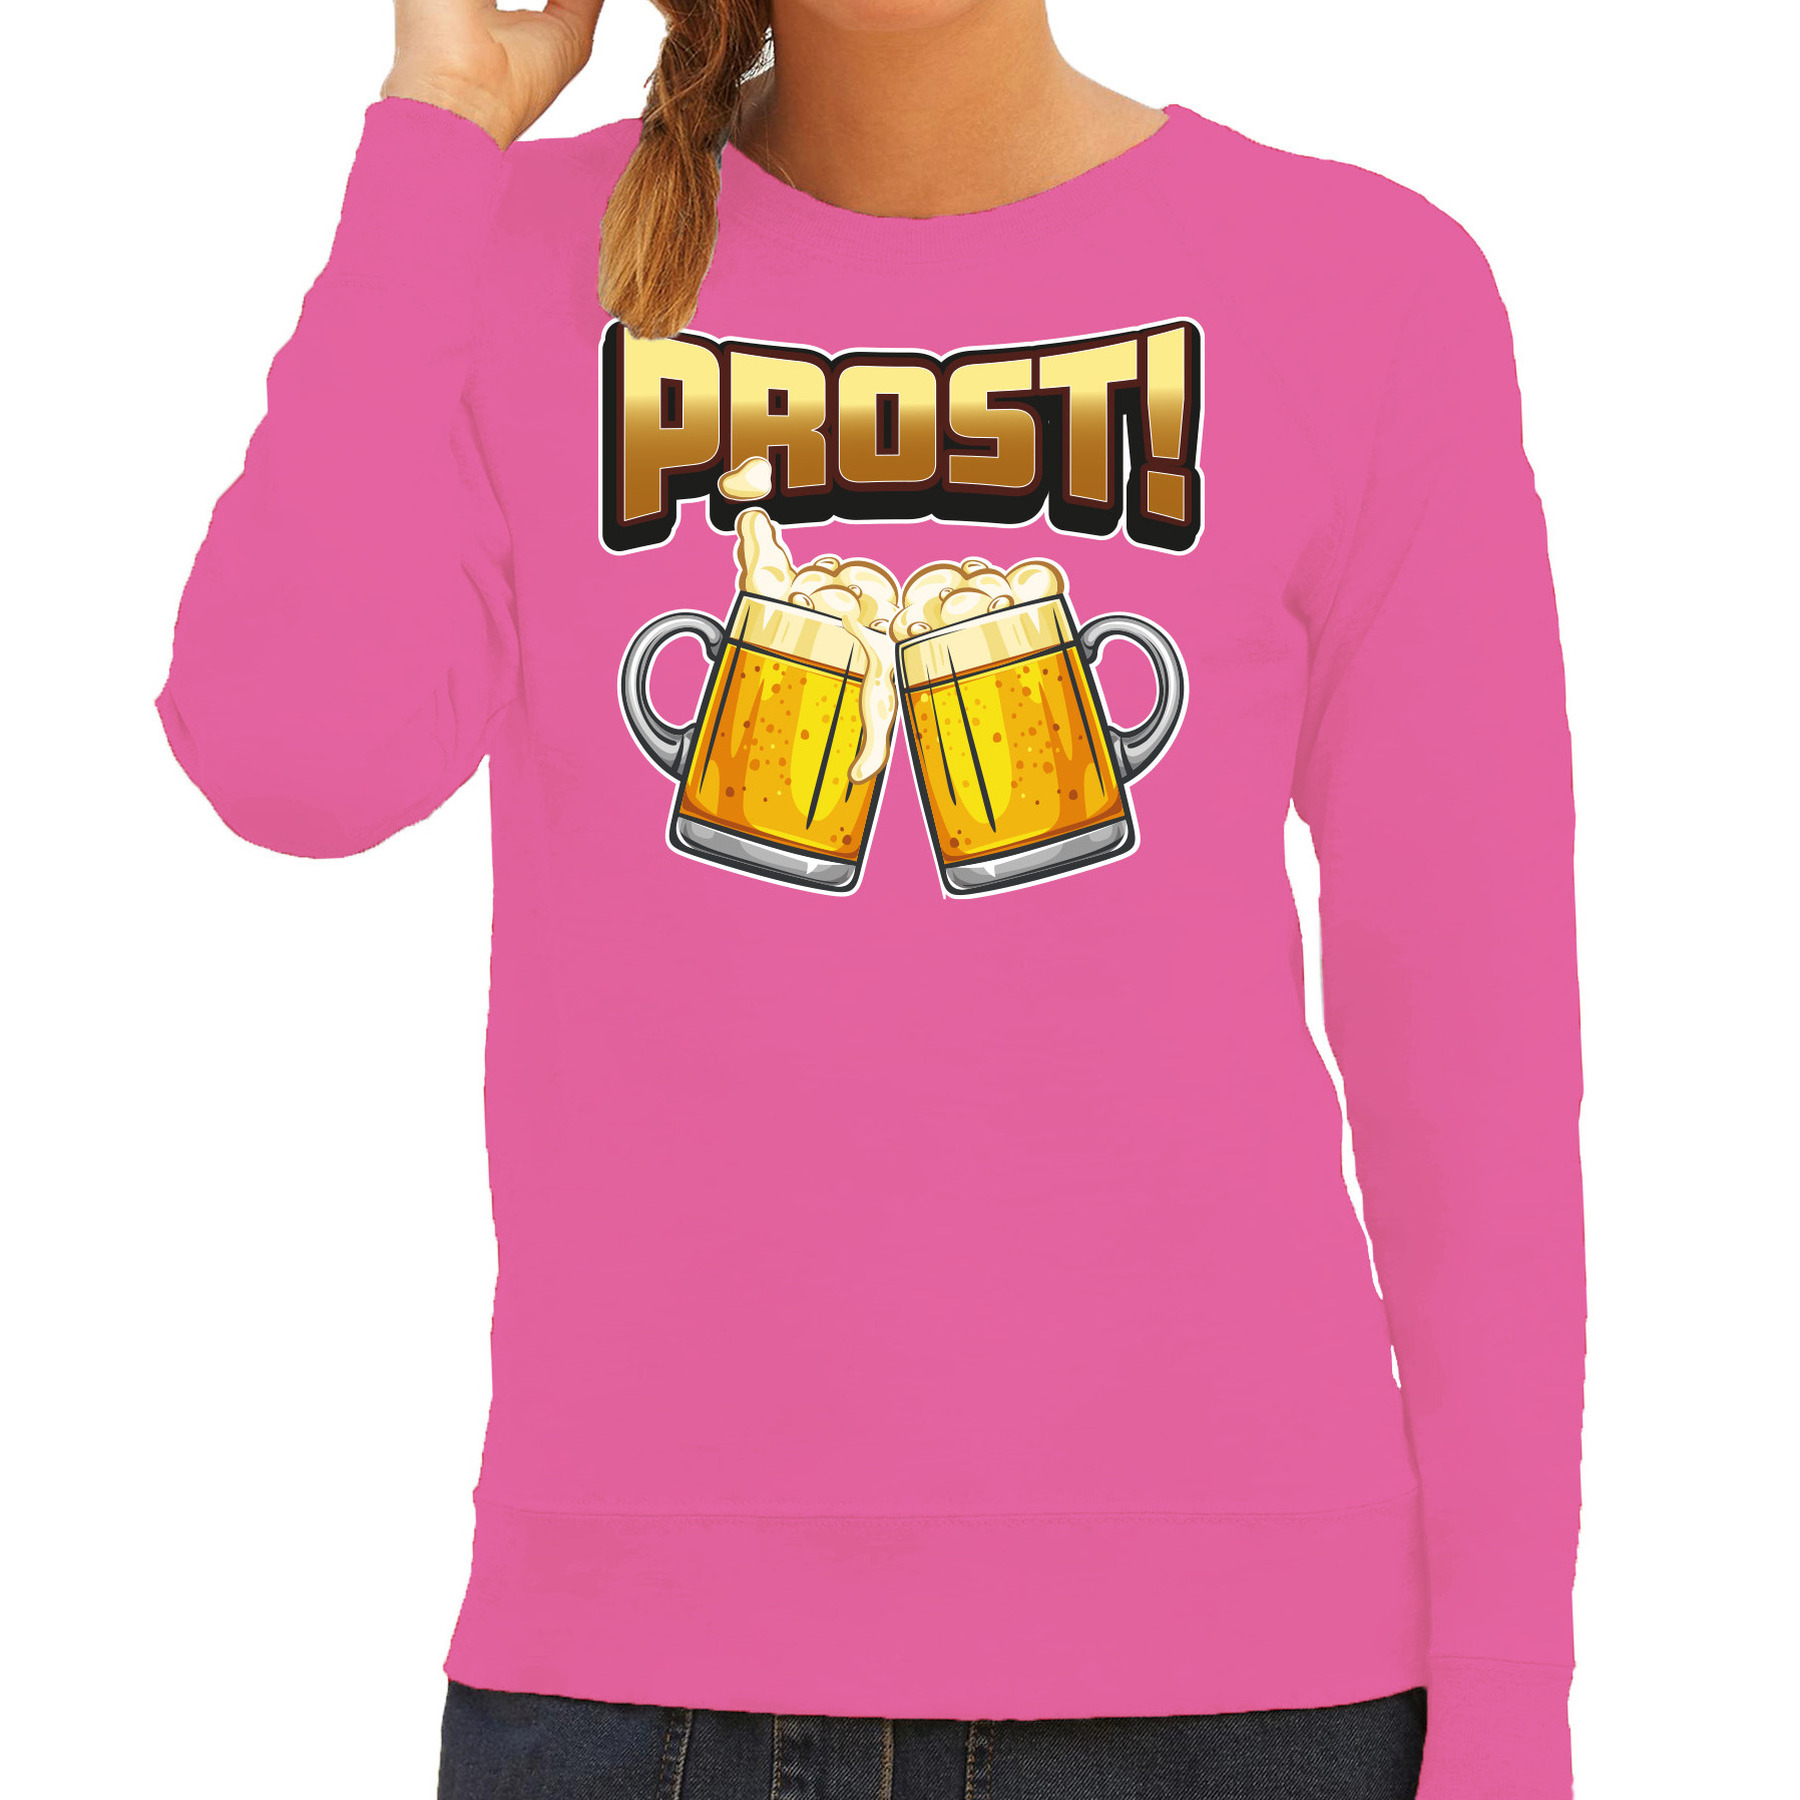 Apres ski sweater-trui voor dames prost roze wintersport proost-proosten